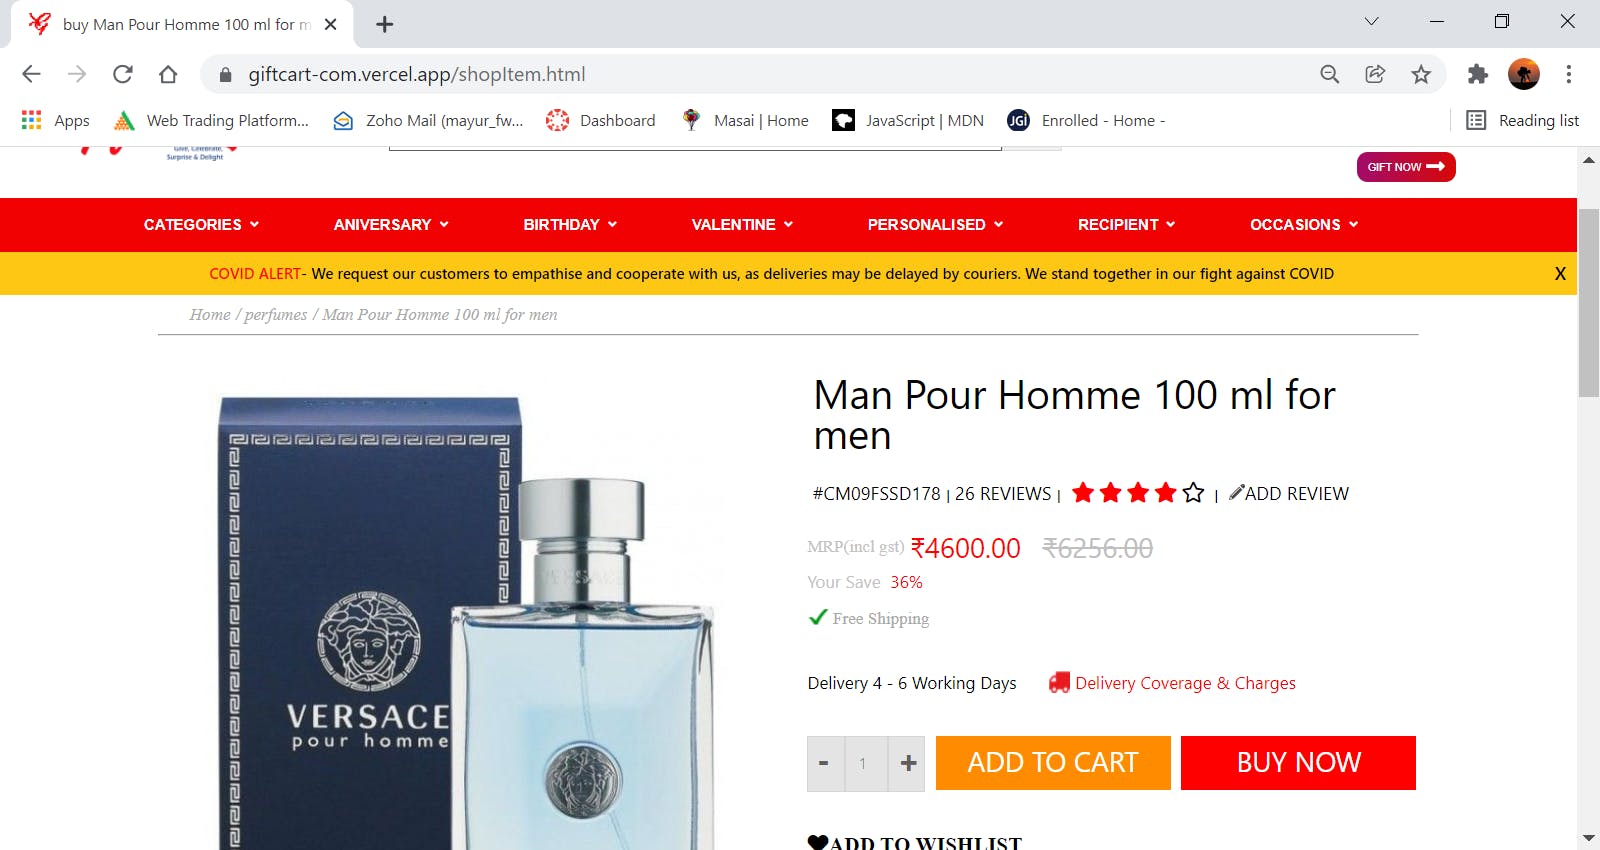 buy Man Pour Homme 100 ml for men - Google Chrome 23-Jan-22 4_04_50 PM.png